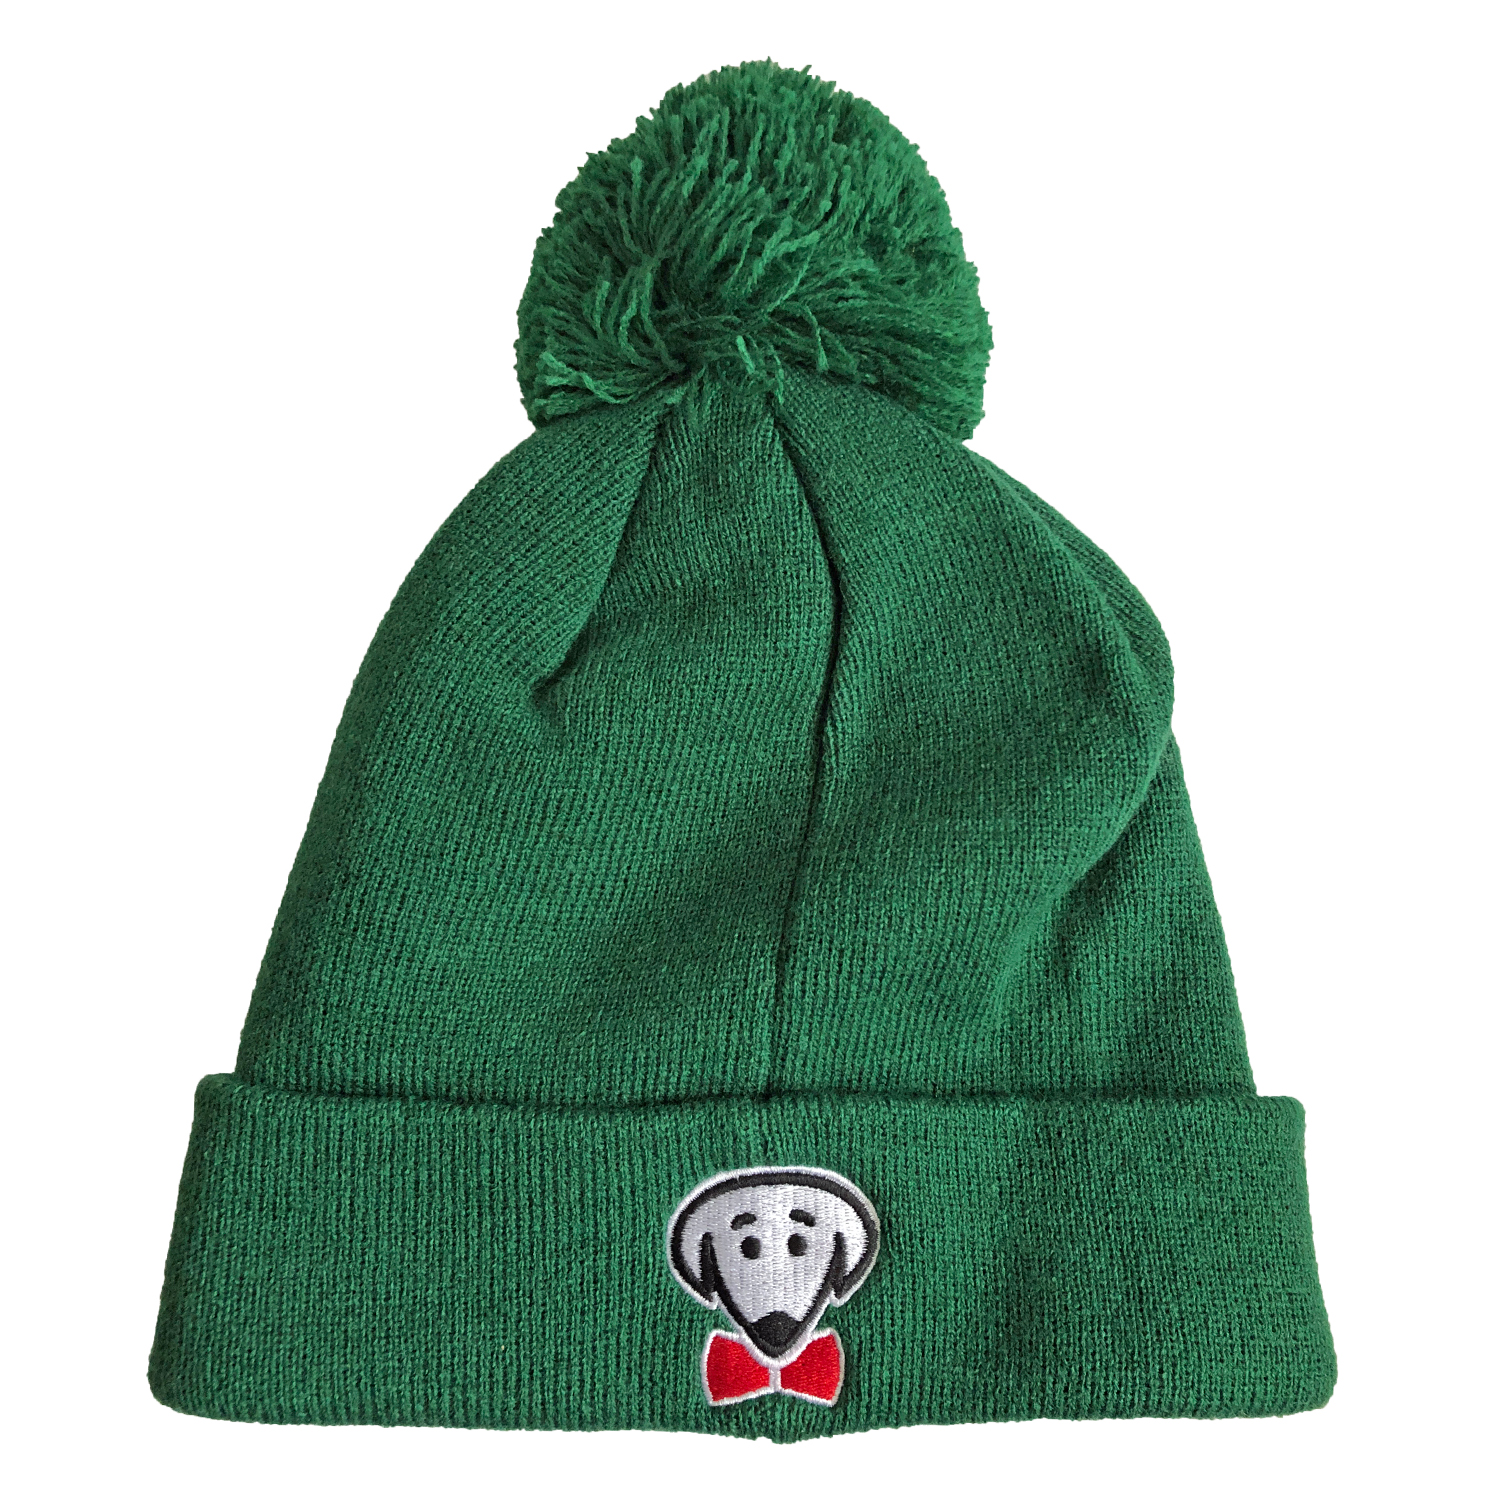 Beau Tyler - RockStar winter knit hat dark green back - maybe temp